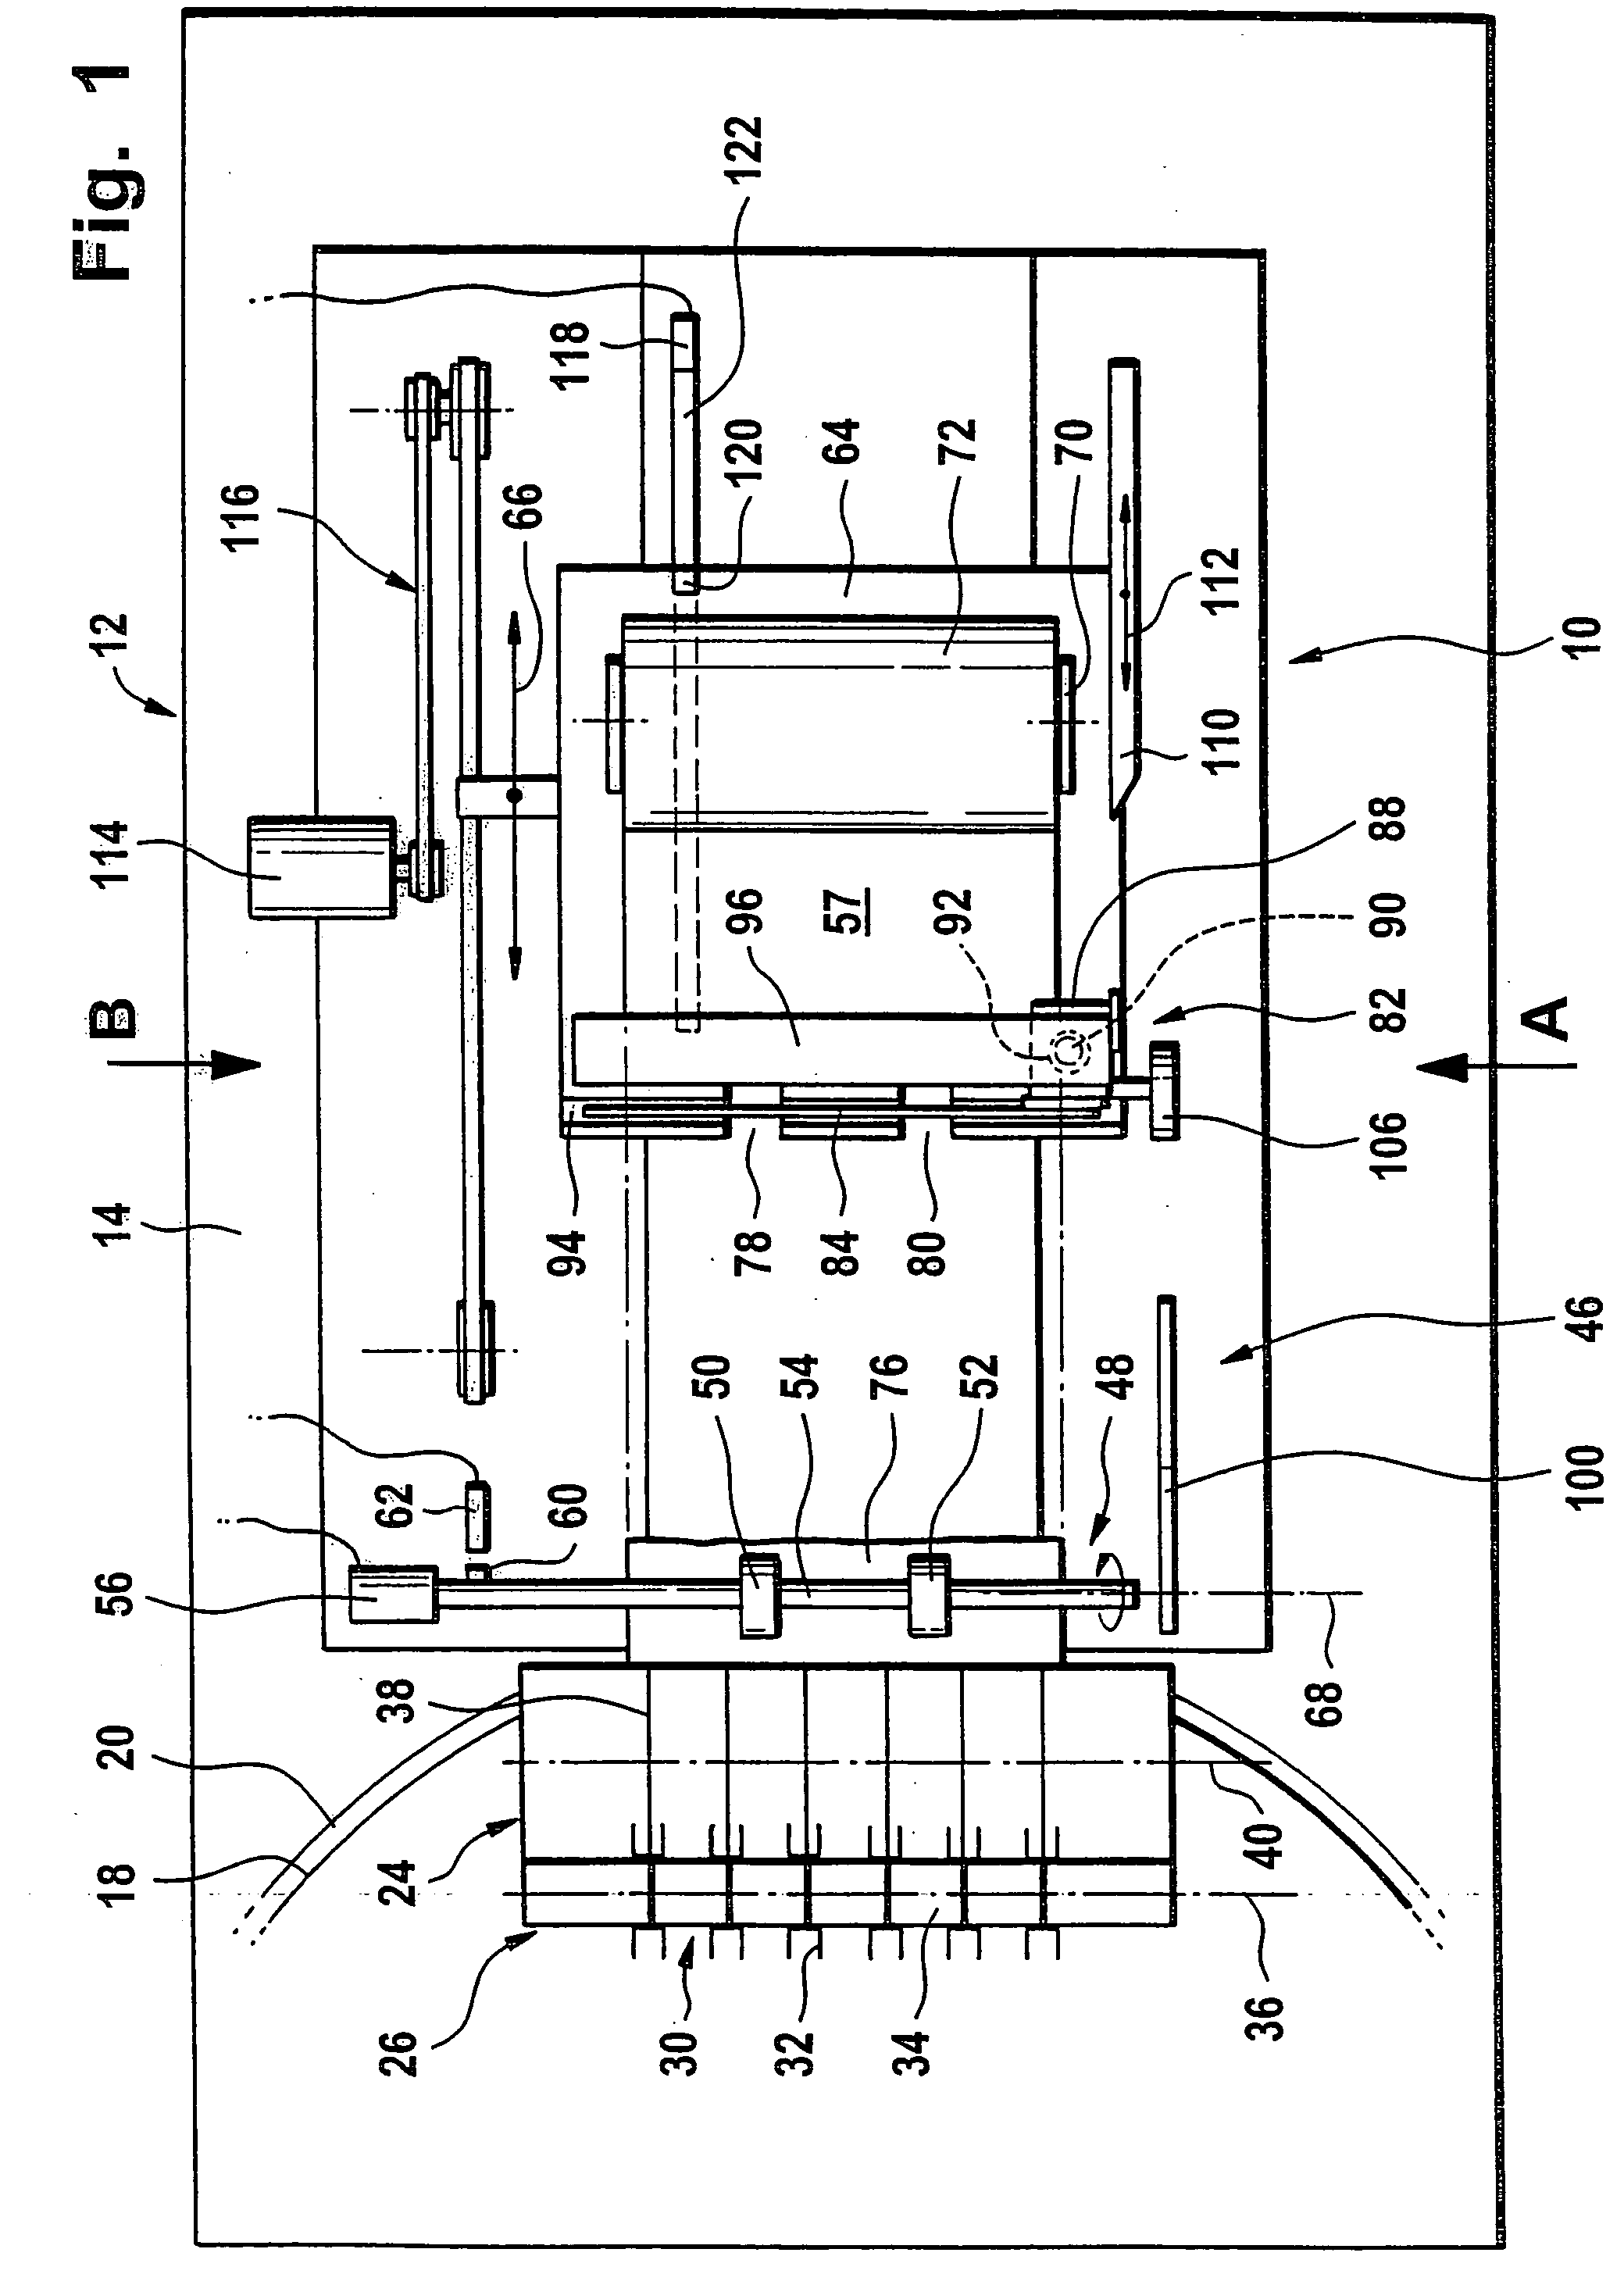 Separating-sheet dispenser, and dispensing method for dispensing separating sheets